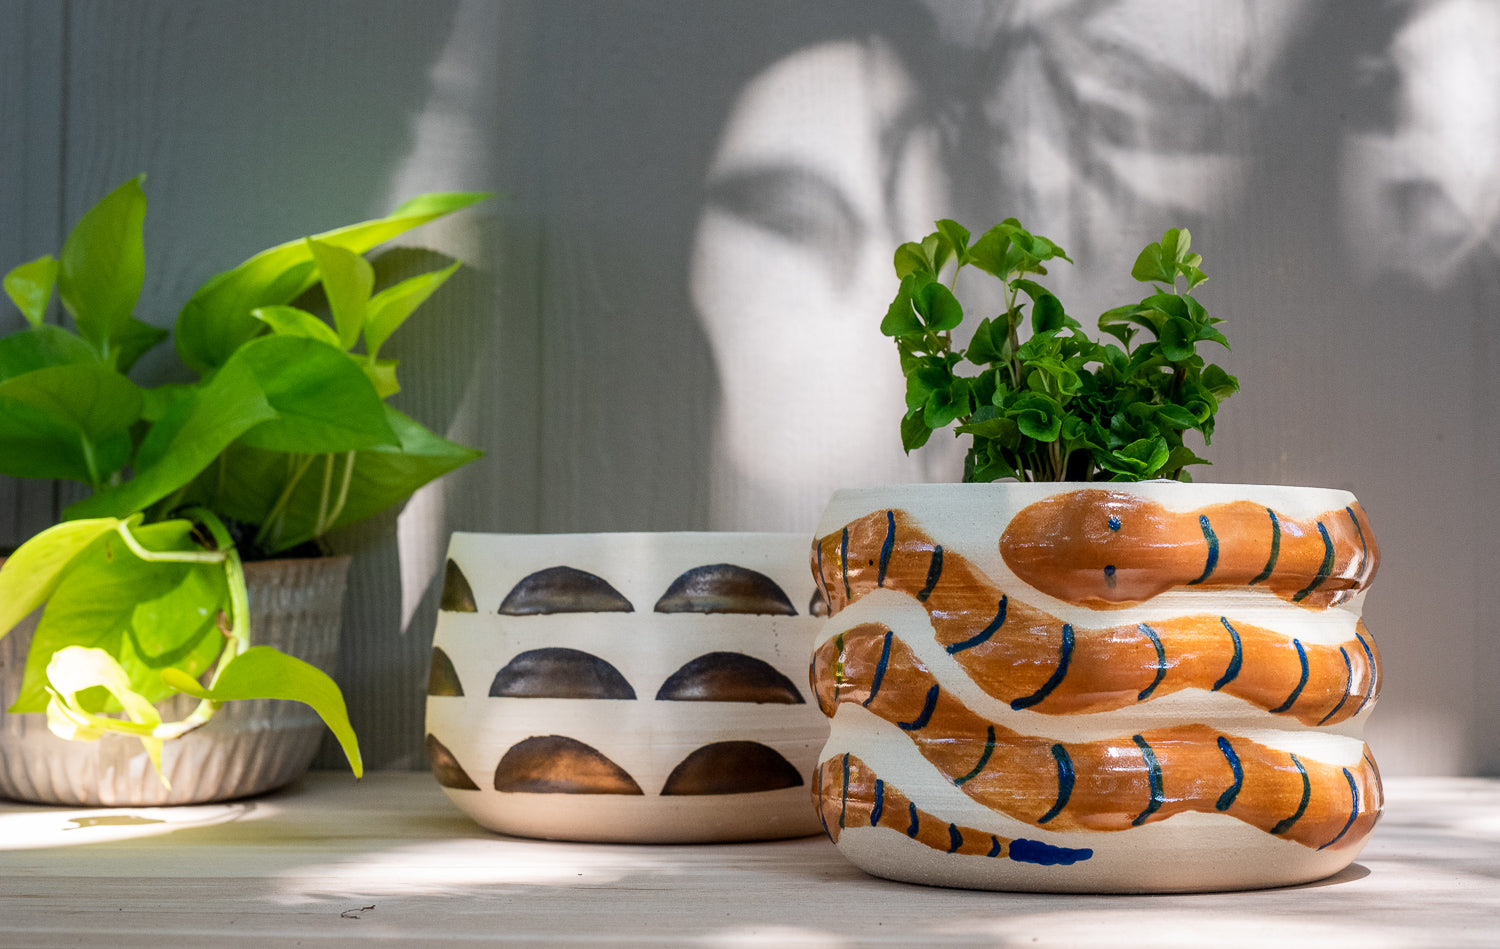 white stoneware vase with hand painted snake design - Hey Moon Ceramics